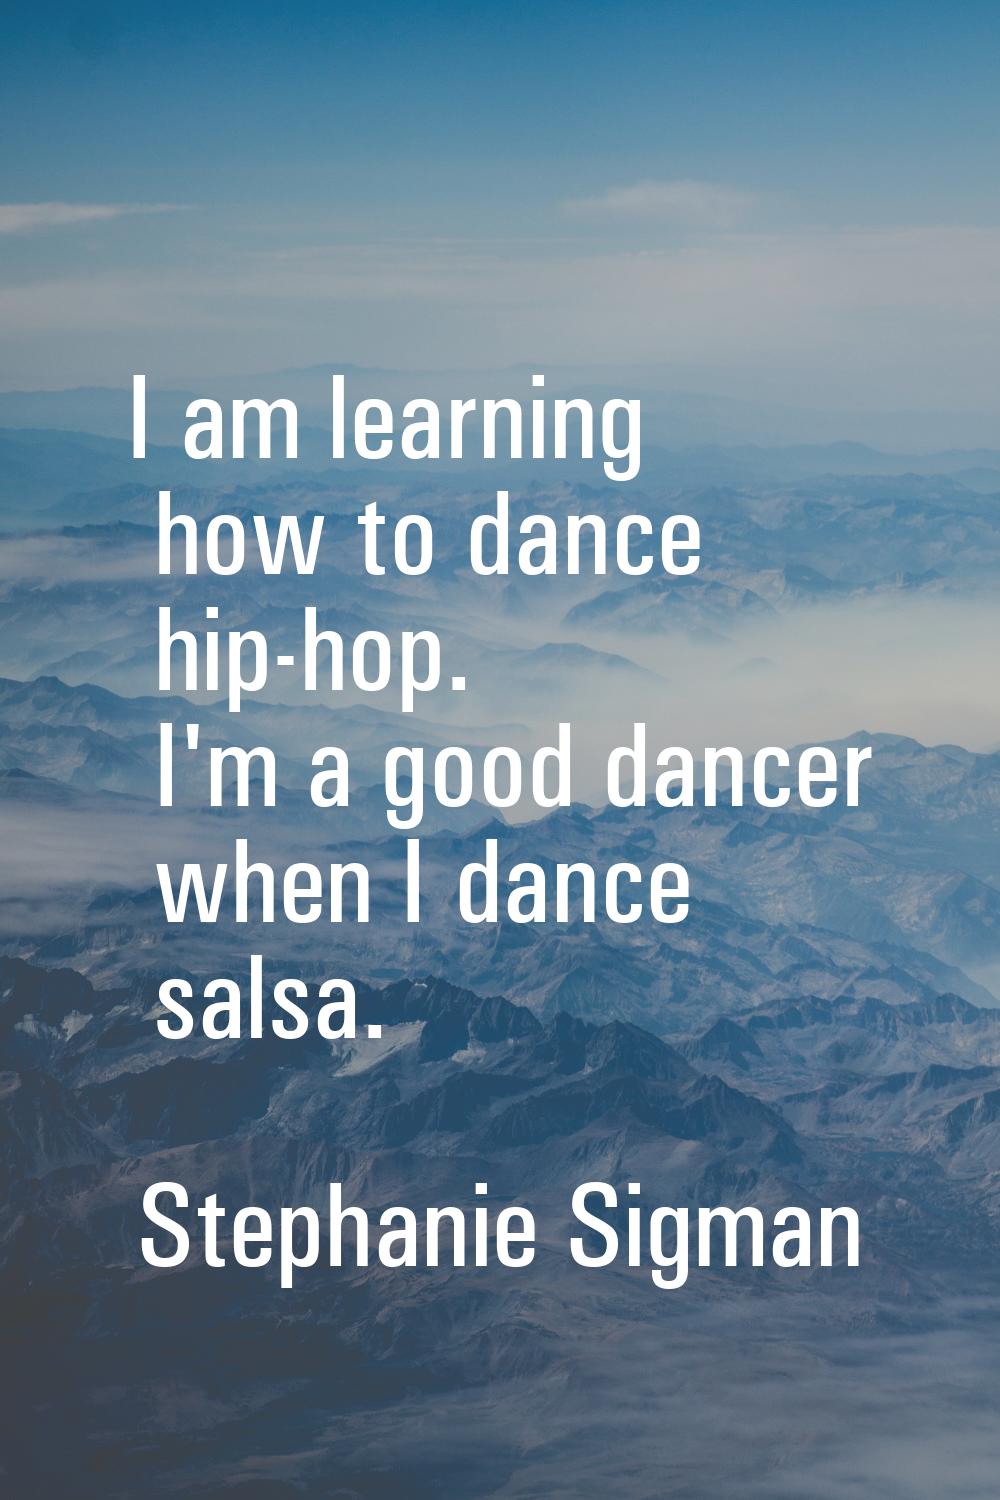 I am learning how to dance hip-hop. I'm a good dancer when I dance salsa.